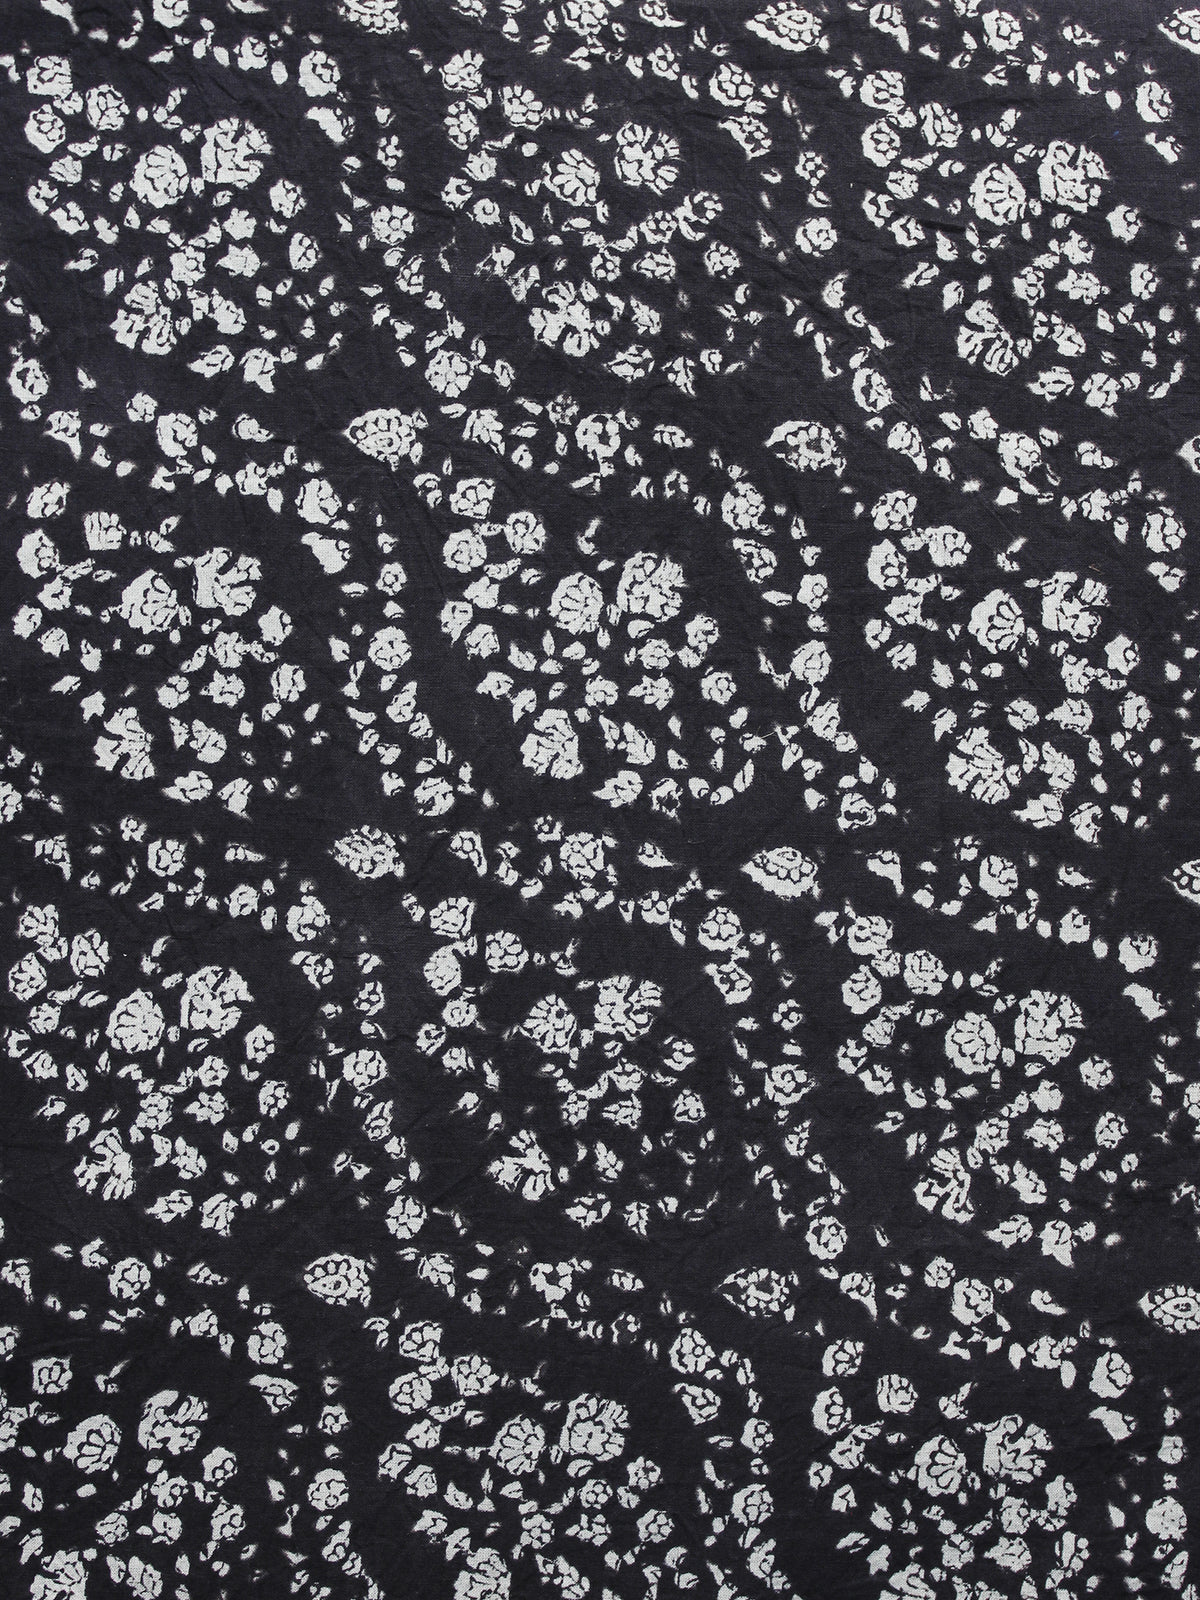 Black White Hand Block Printed Cotton Fabric Per Meter - F003F1221